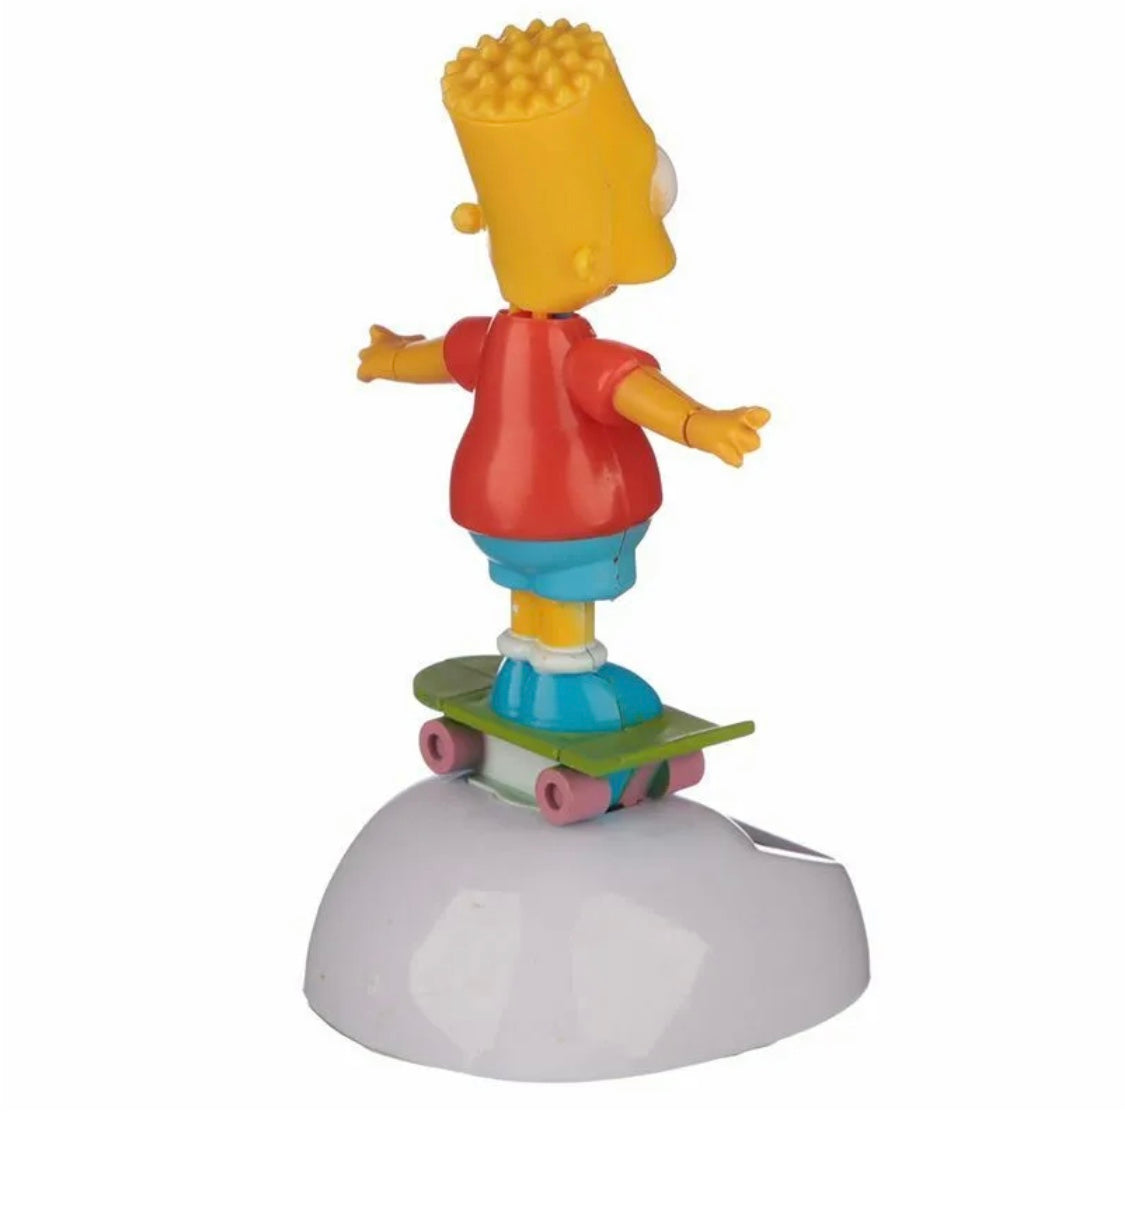 Bart Simpson Solar Powered Dancing Figure - Car Dashboard Window Sill Cute Toy